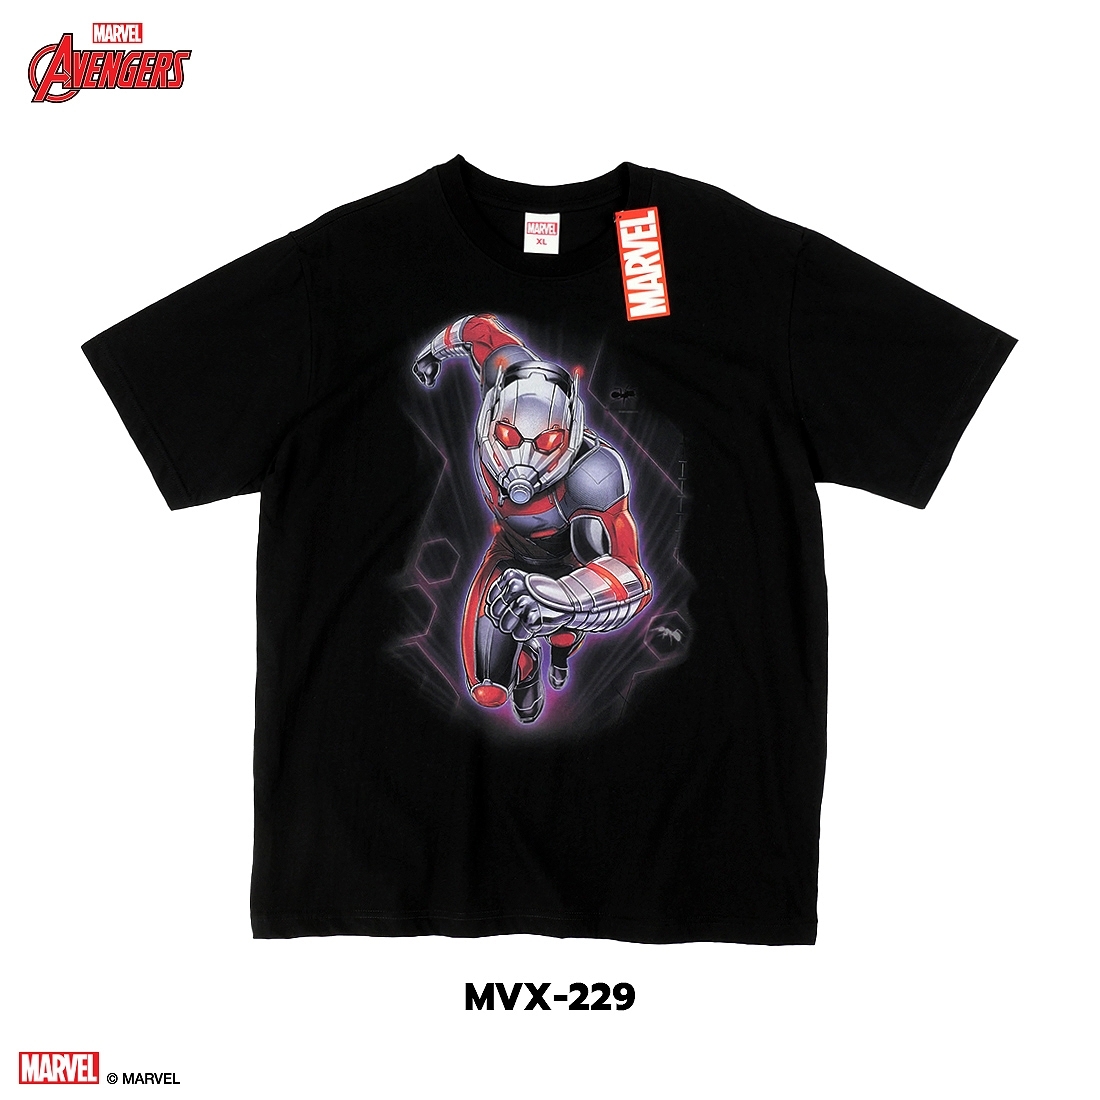 ANT MAN Marvel Comics T-shirt (MVX-229)